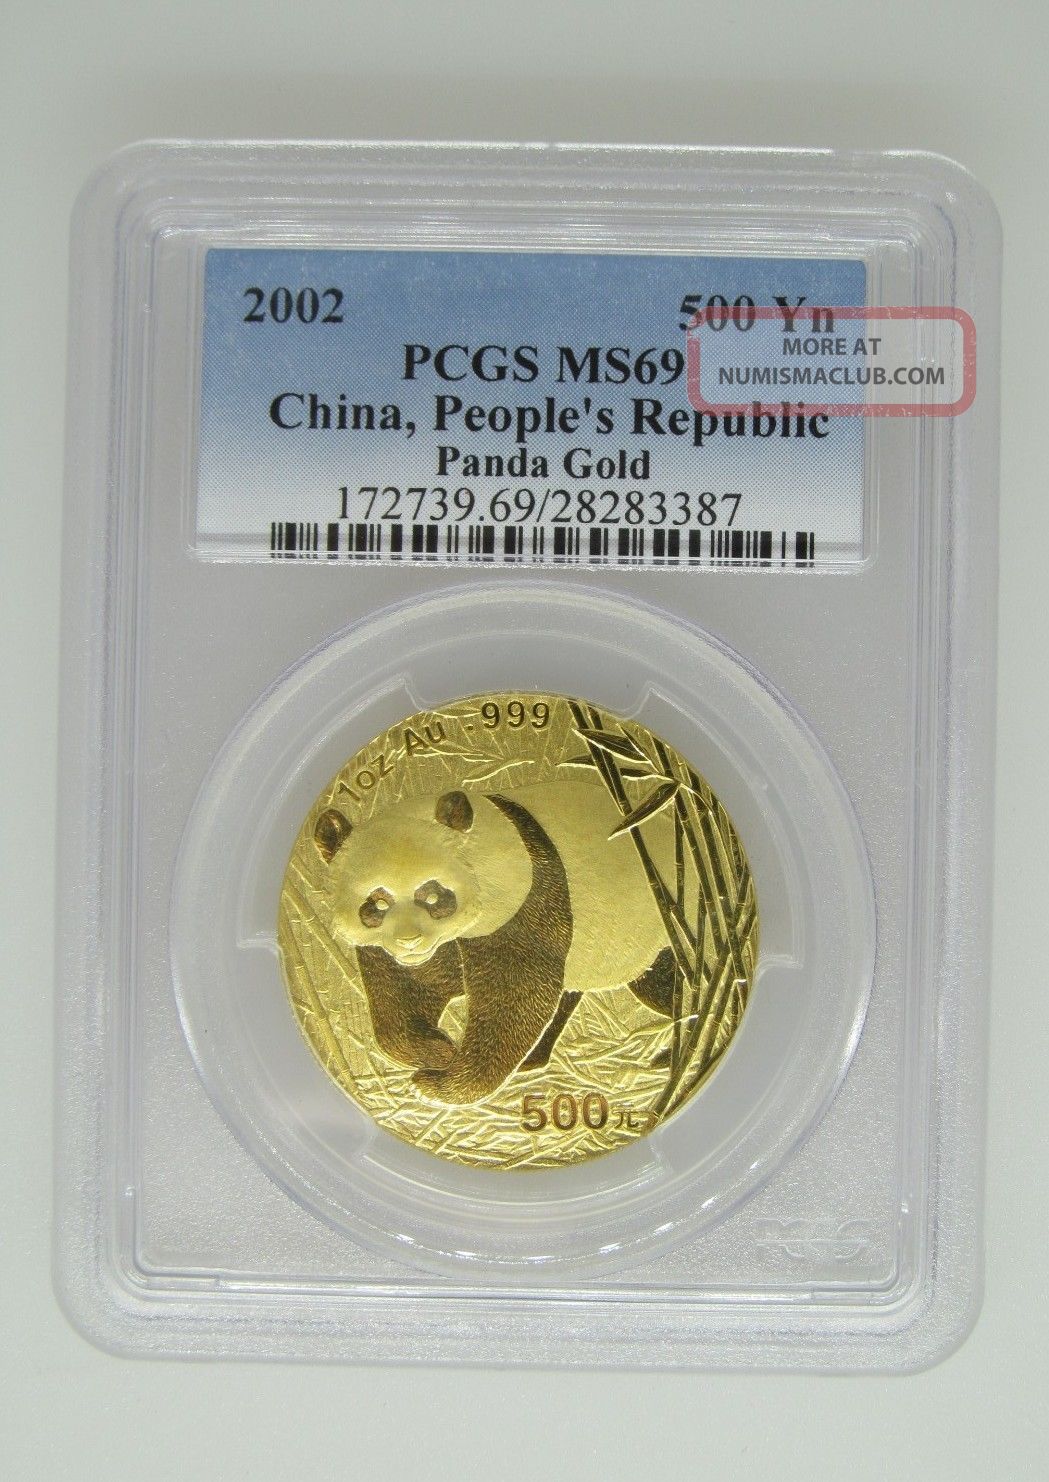 2002 Pcgs Ms69 China People ' S Republic -.  999 Gold Panda - 500 Yn - One Ounce - 1 Ozt China photo